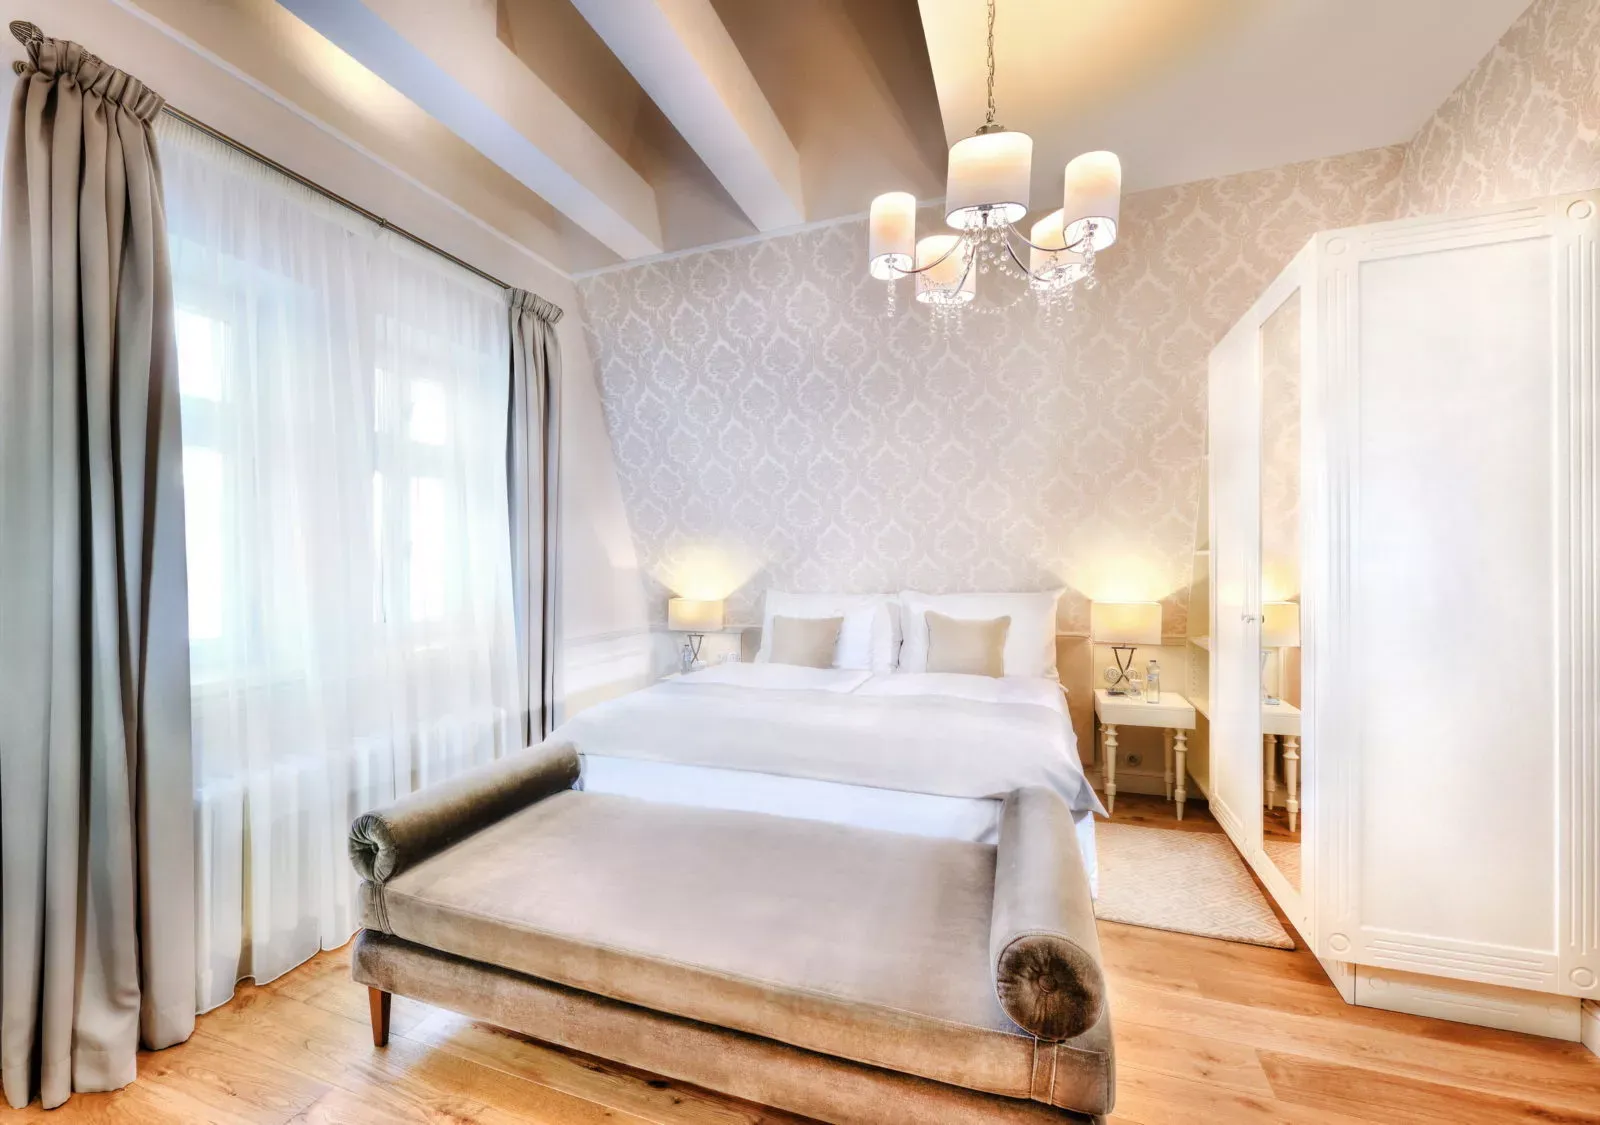 2 Apartmán Rudolf Hotel Lomnica interier 2017 30 – kópia – kópia